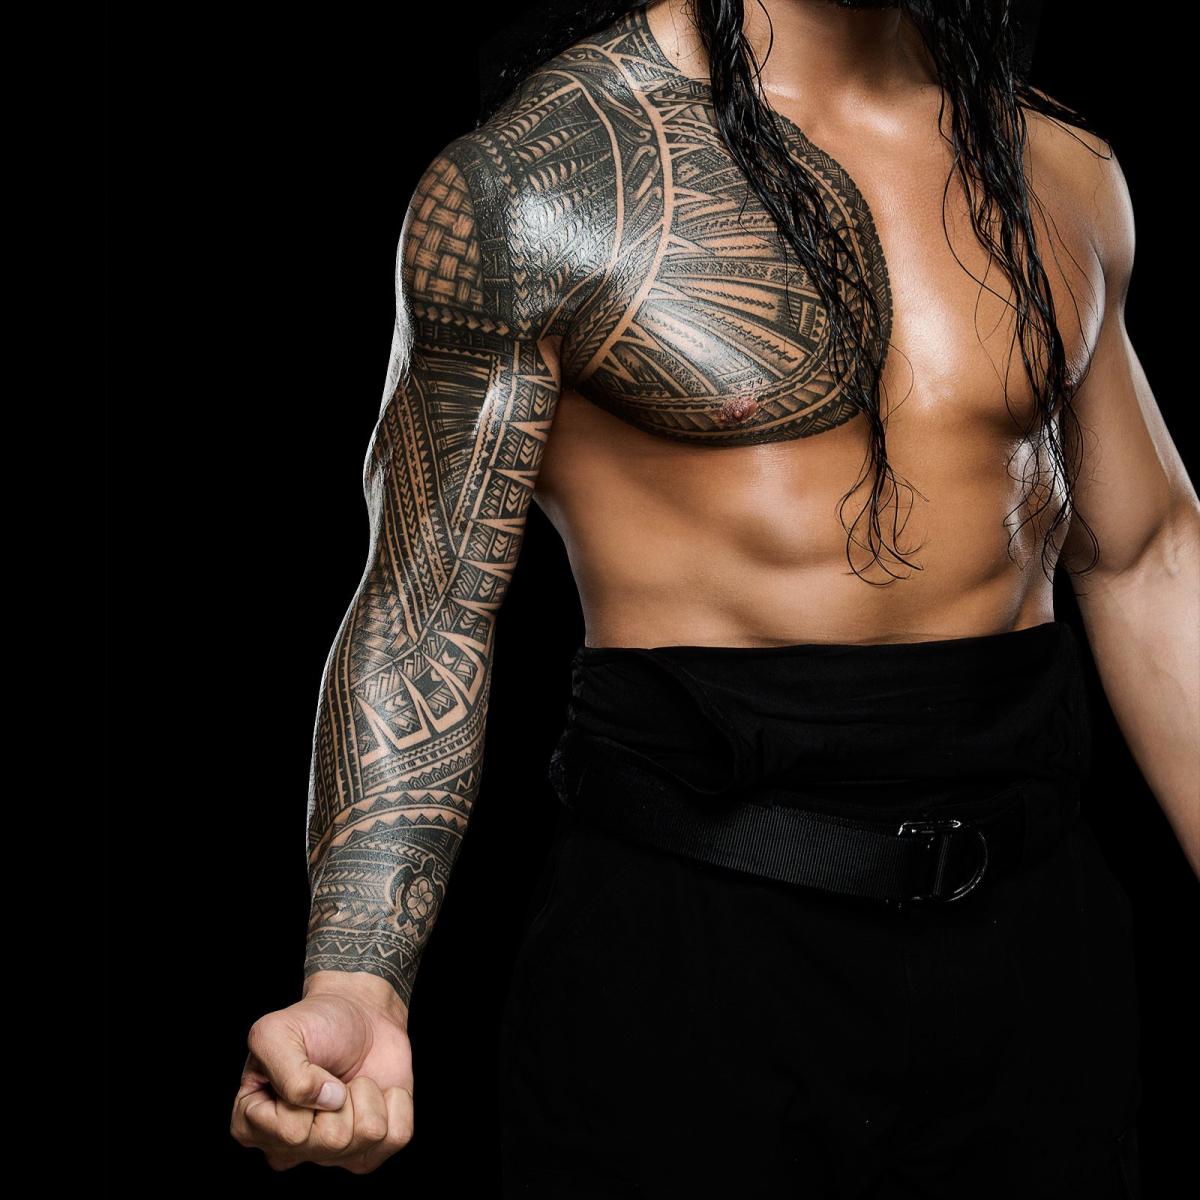 Who is Roman Reigns tattoo artist